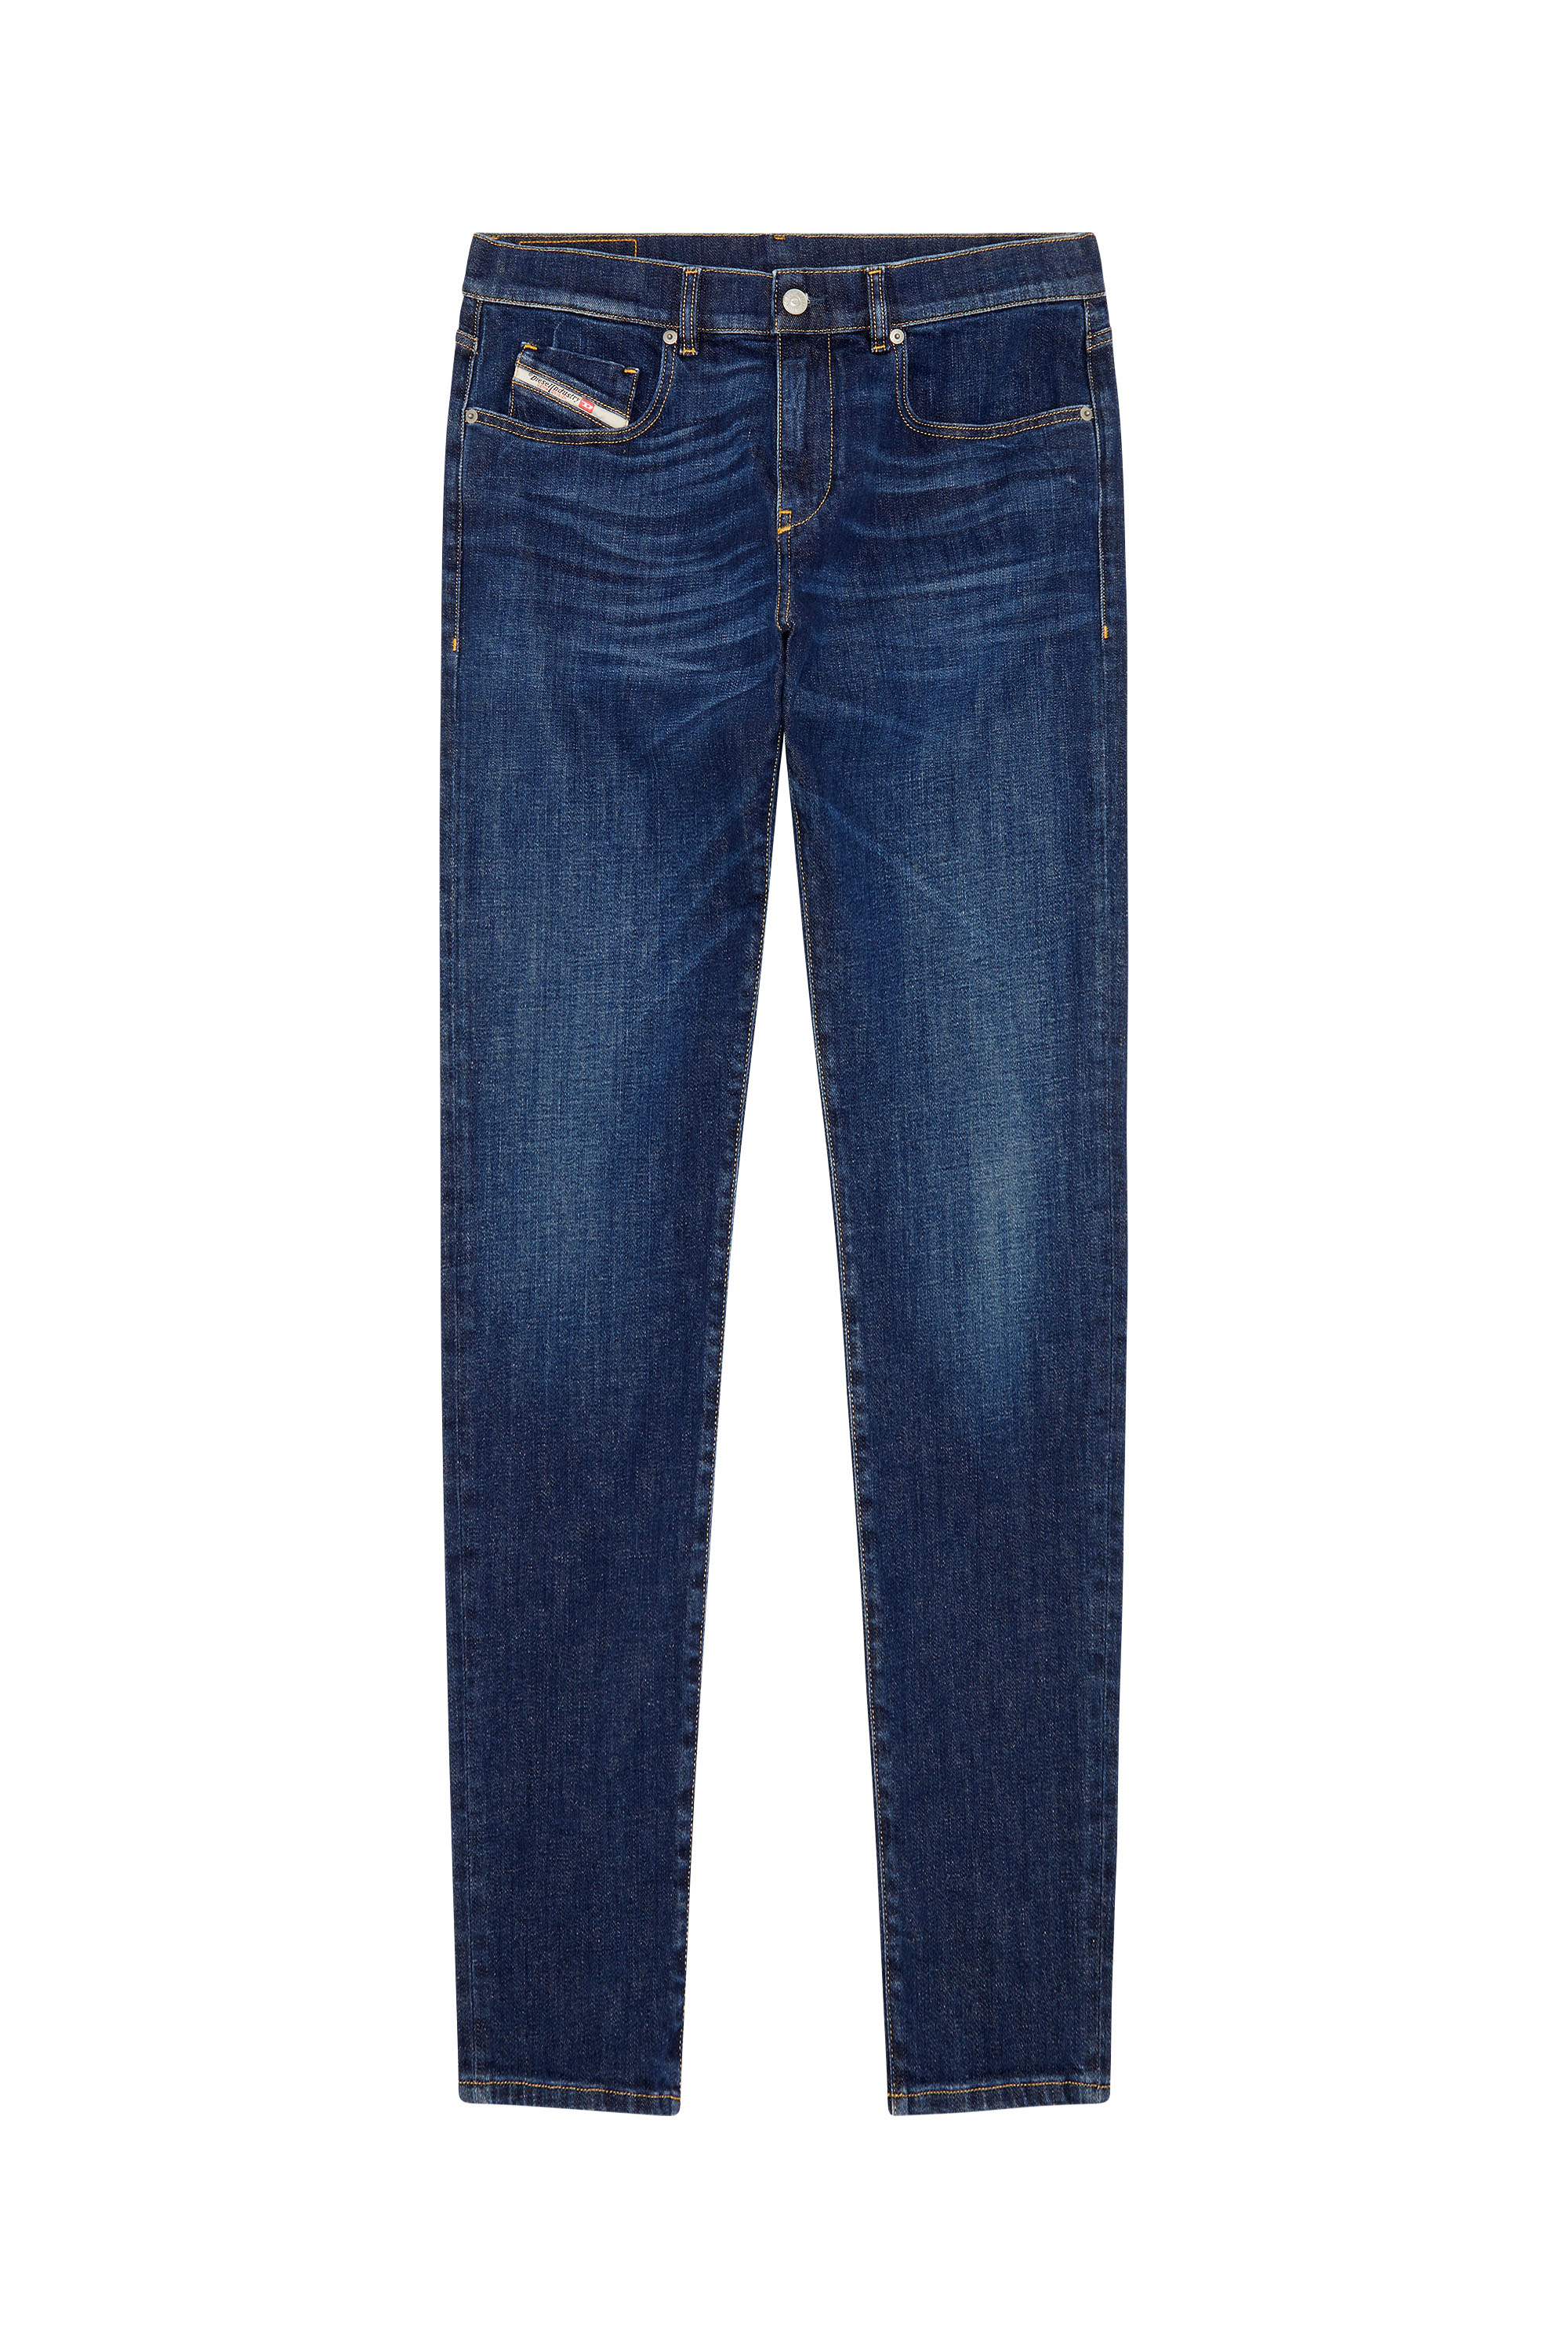 2019 D-Strukt 09B90 Slim Jeans, Dunkelblau - Jeans